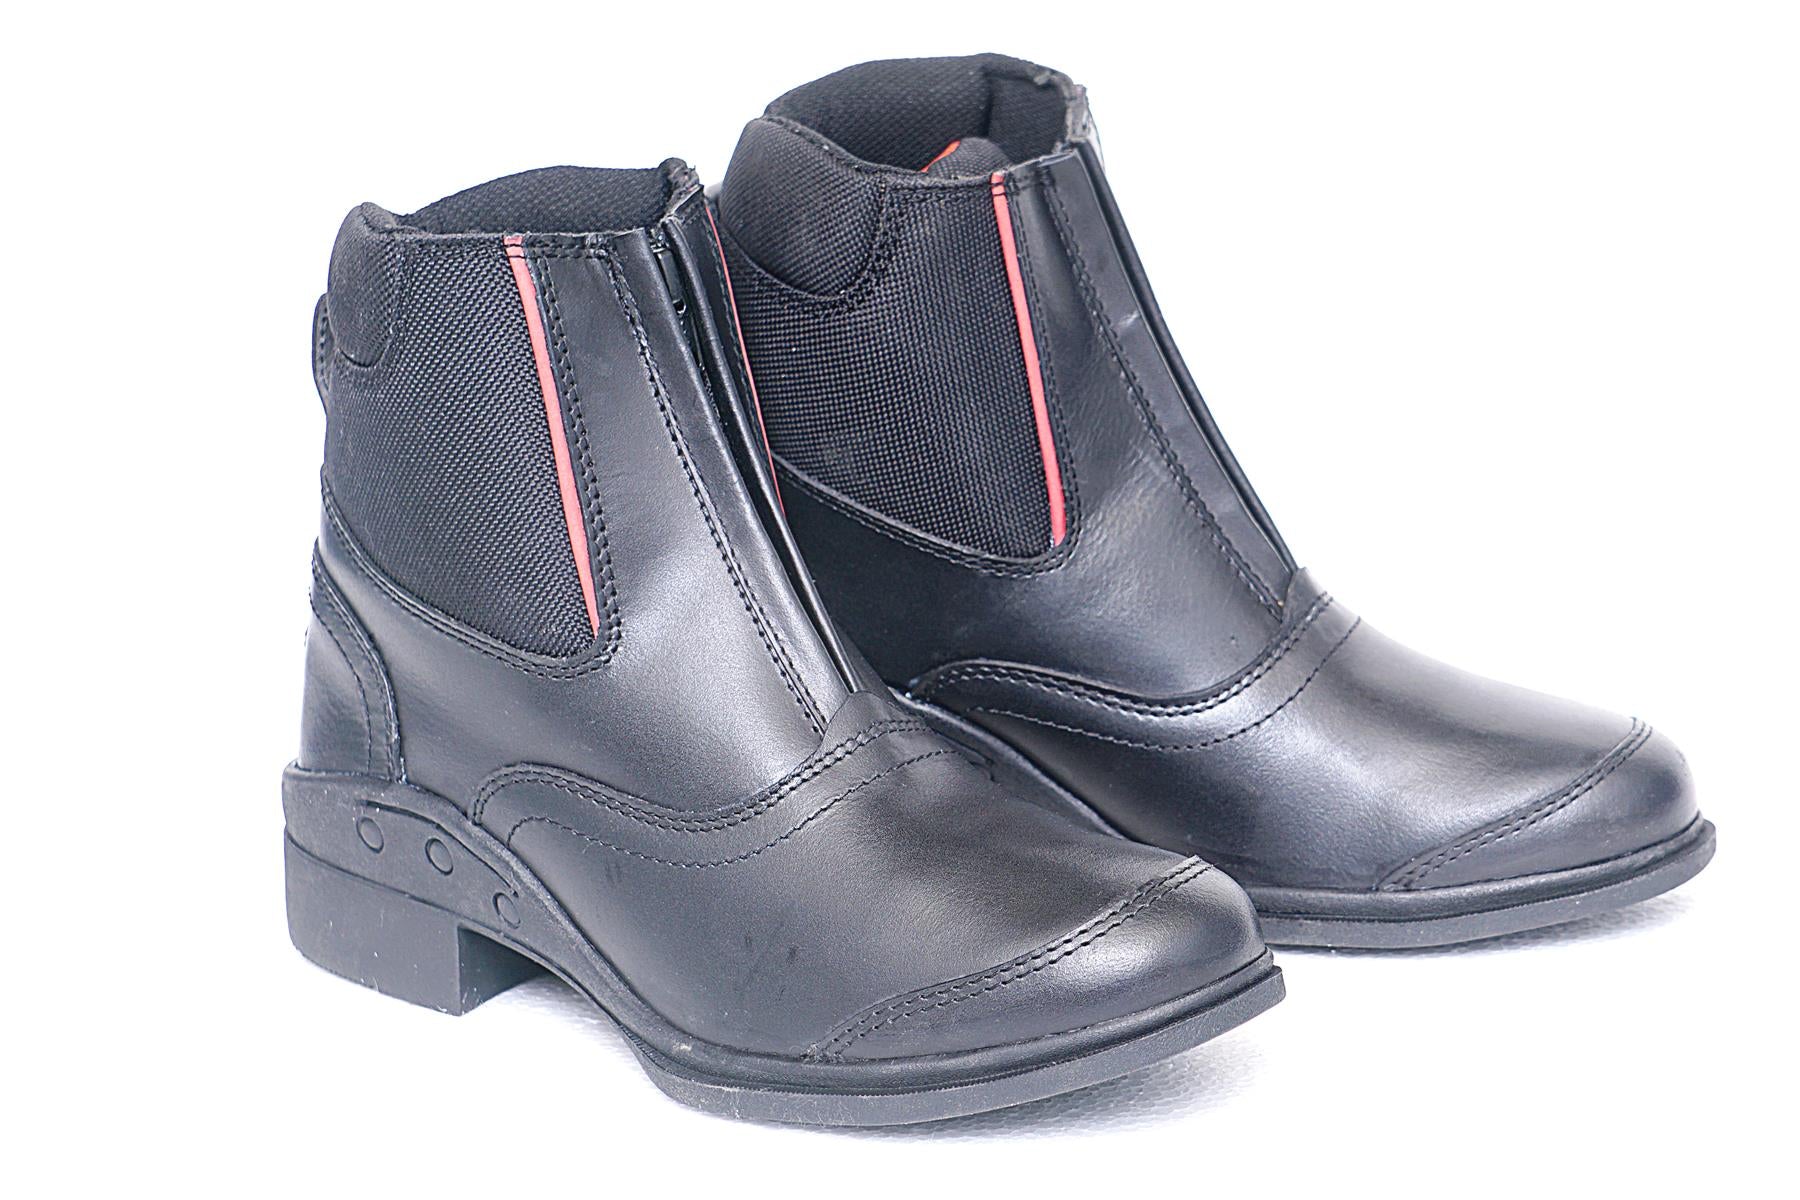 Zipped Paddock Jodhpurs Stable Boots Extra Comfort Horse Riding Boots Black 5 -8